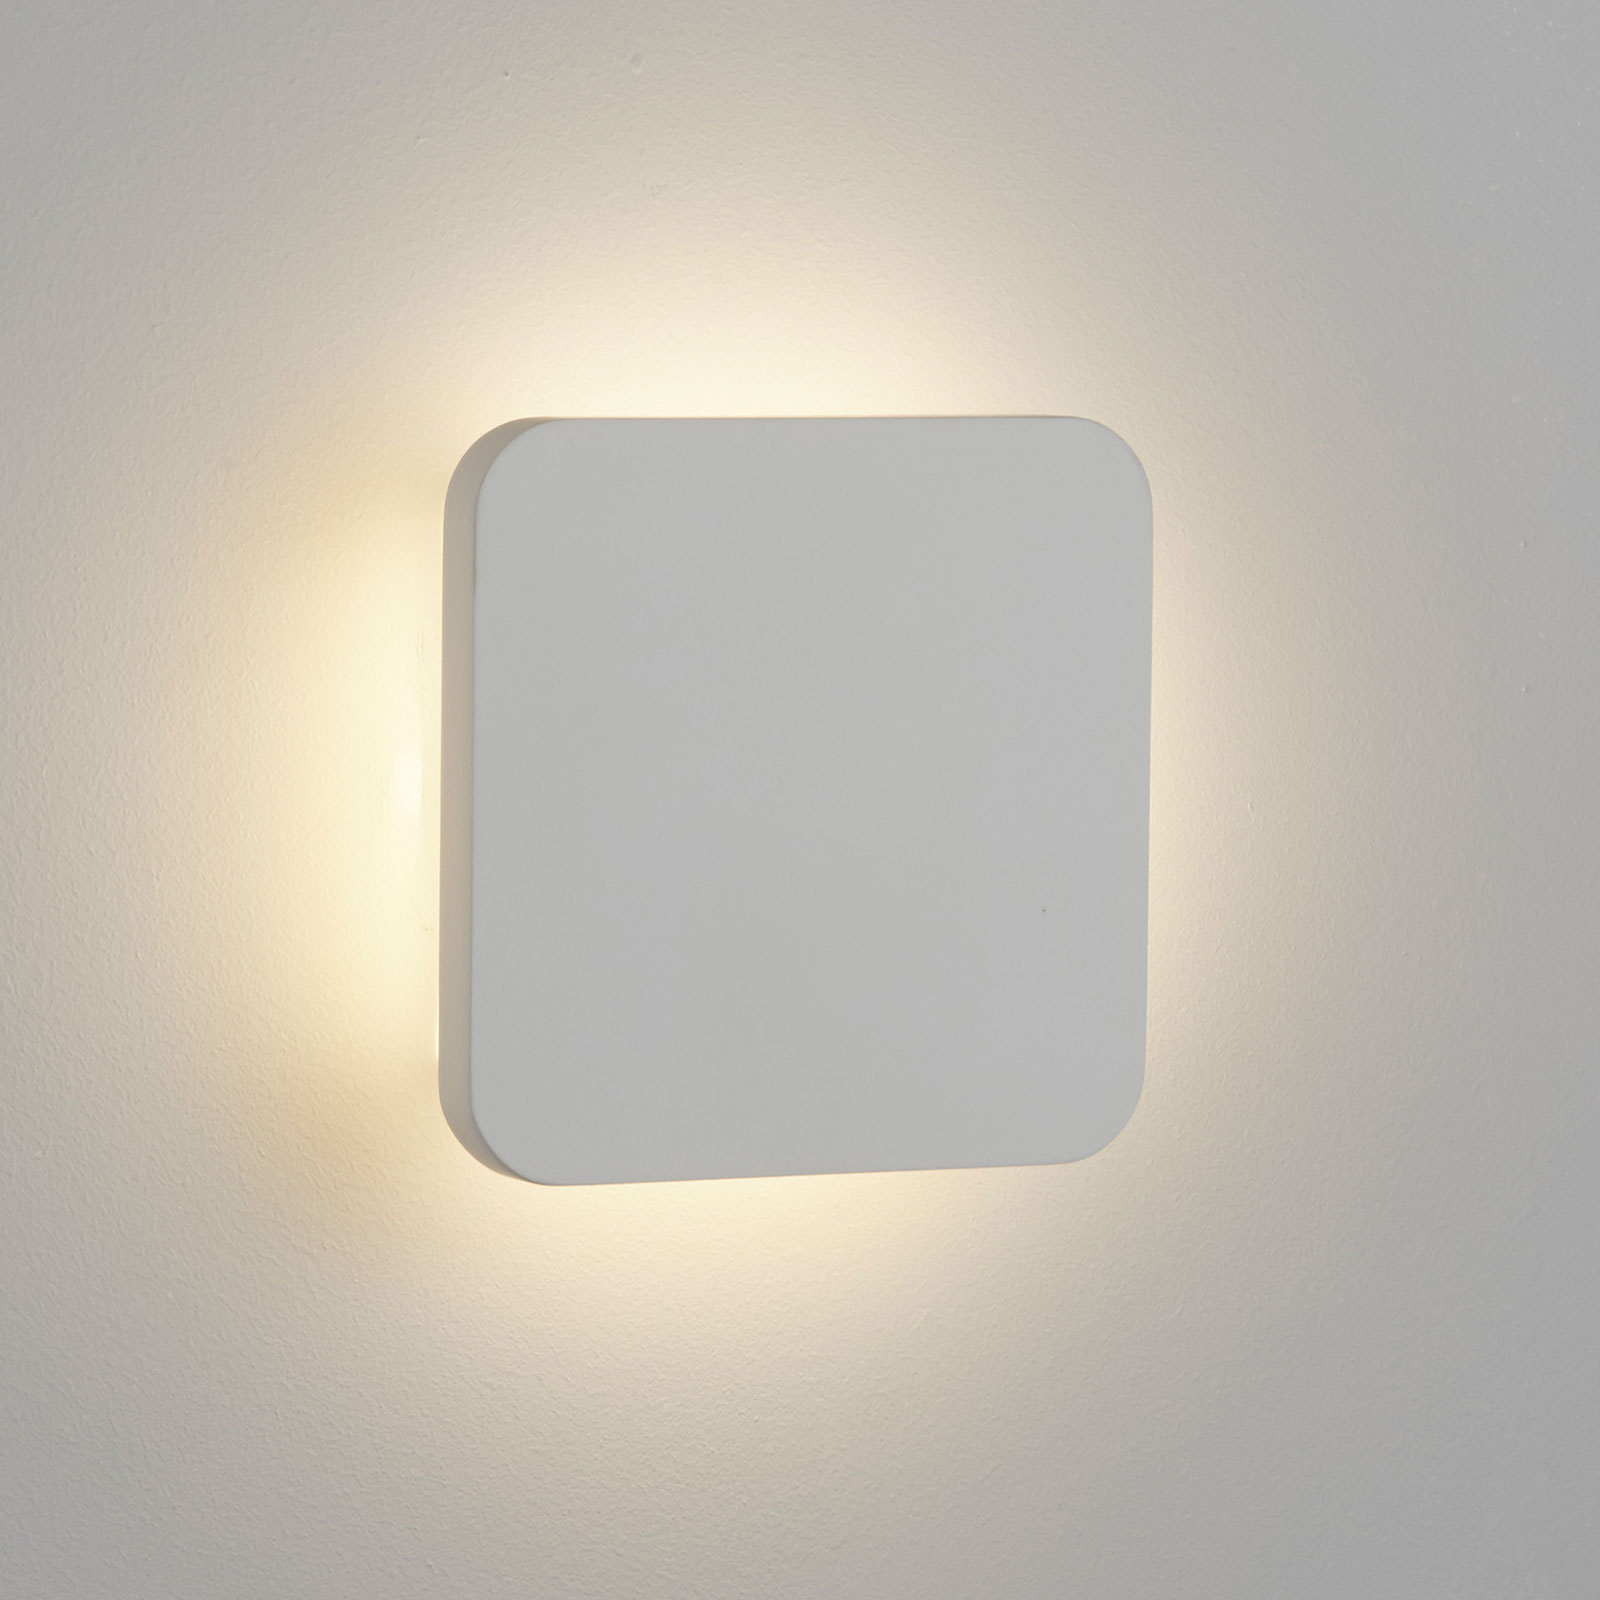 LED-Wandleuchte Gypsum 15x15cm aus weißem Gips